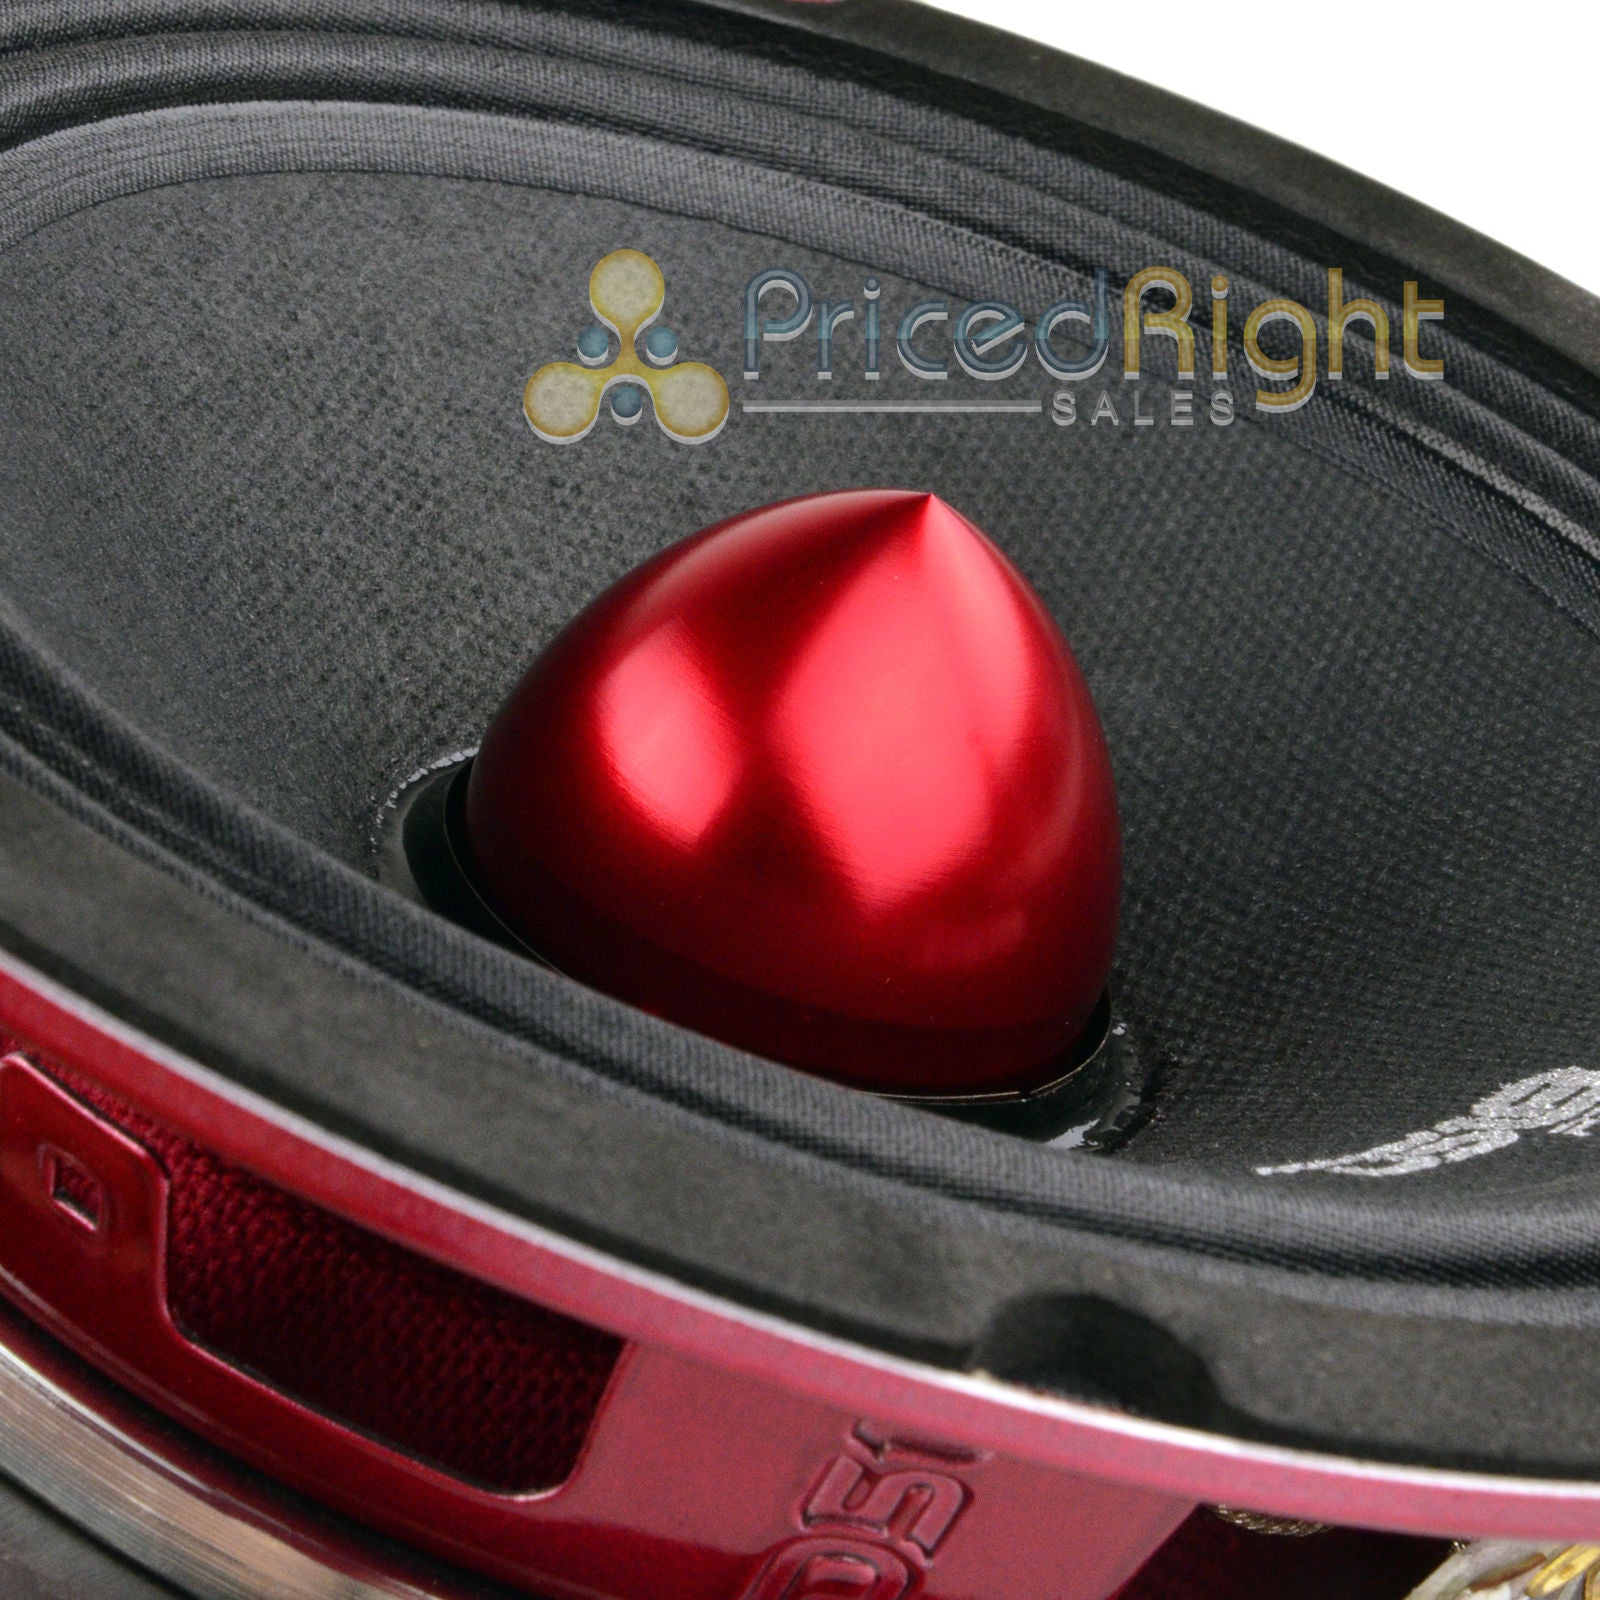 2 DS18 PRO-X6BM 1000W Max 6.5" Midrange Speakers Loudspeaker With Bullet 8 Ohm